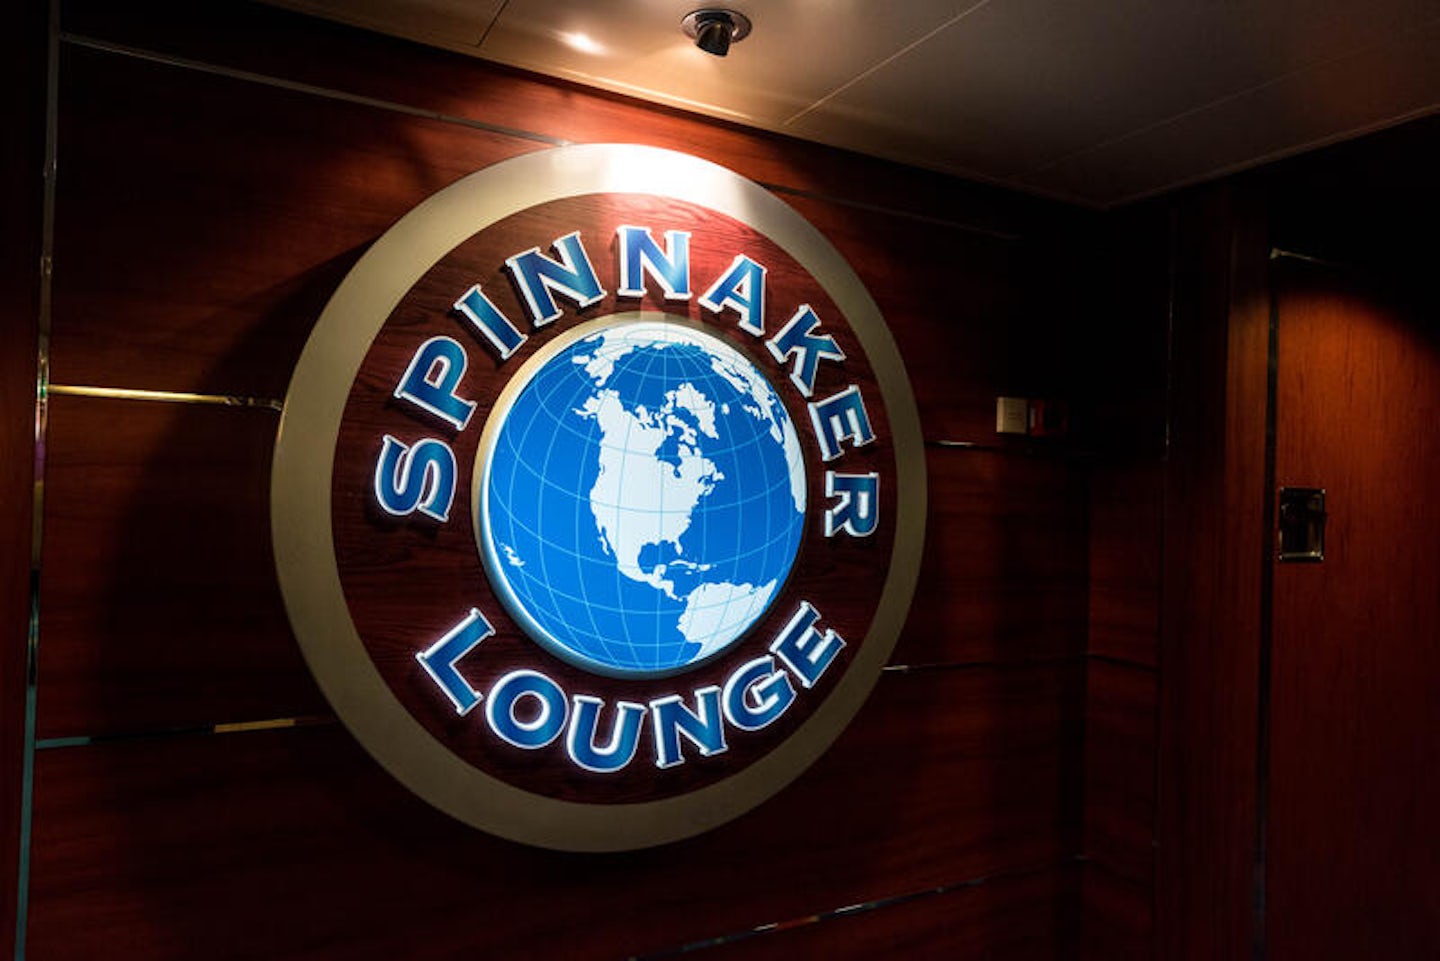 Live Music in Spinnaker Lounge on Norwegian Pearl